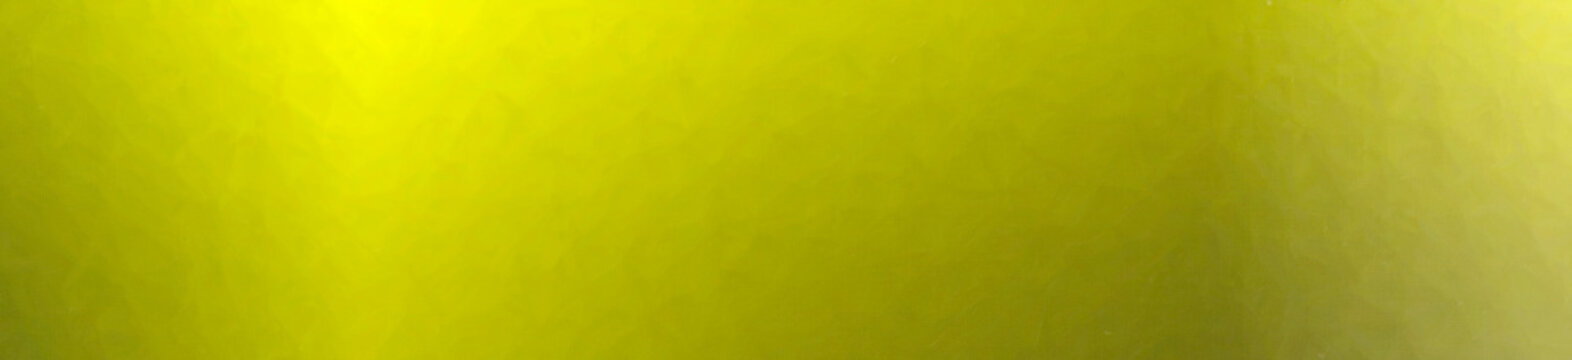 Illustration of lemon yellow and green Oil Pastel banner background.